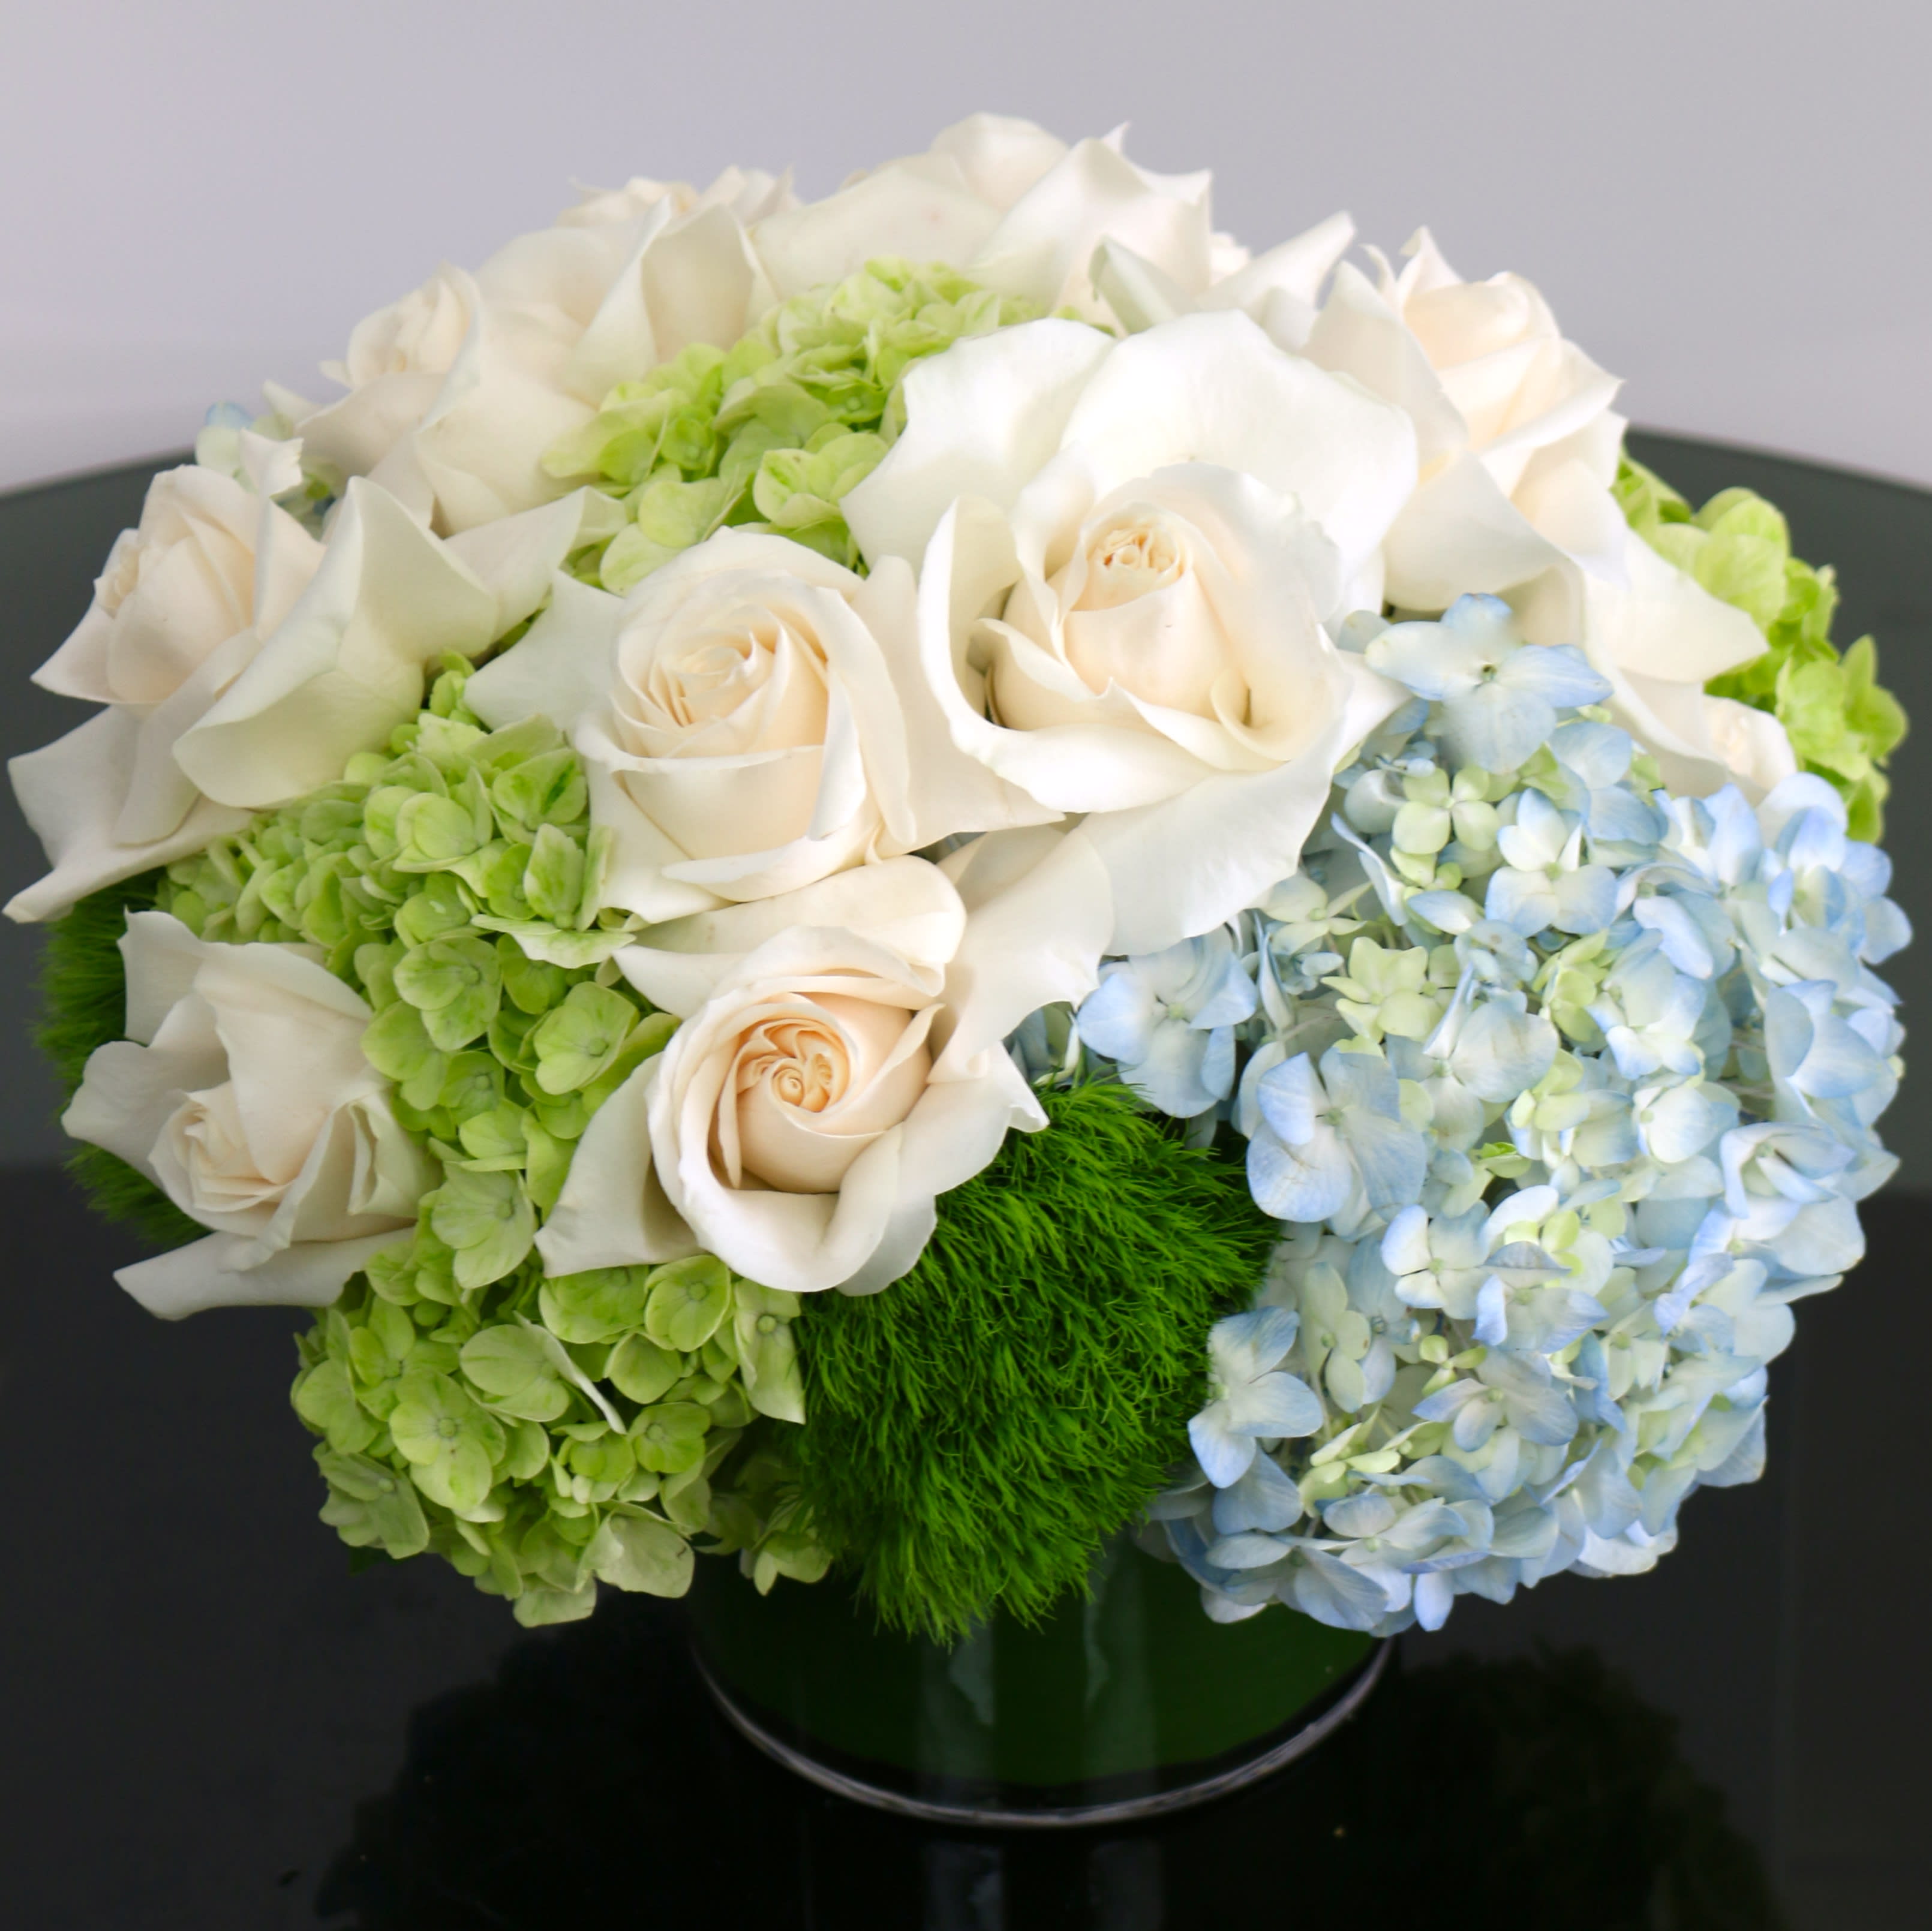 White Roses and Blue Hydrangeas - Full of gorgeous white roses, blue and green hydrangeas.